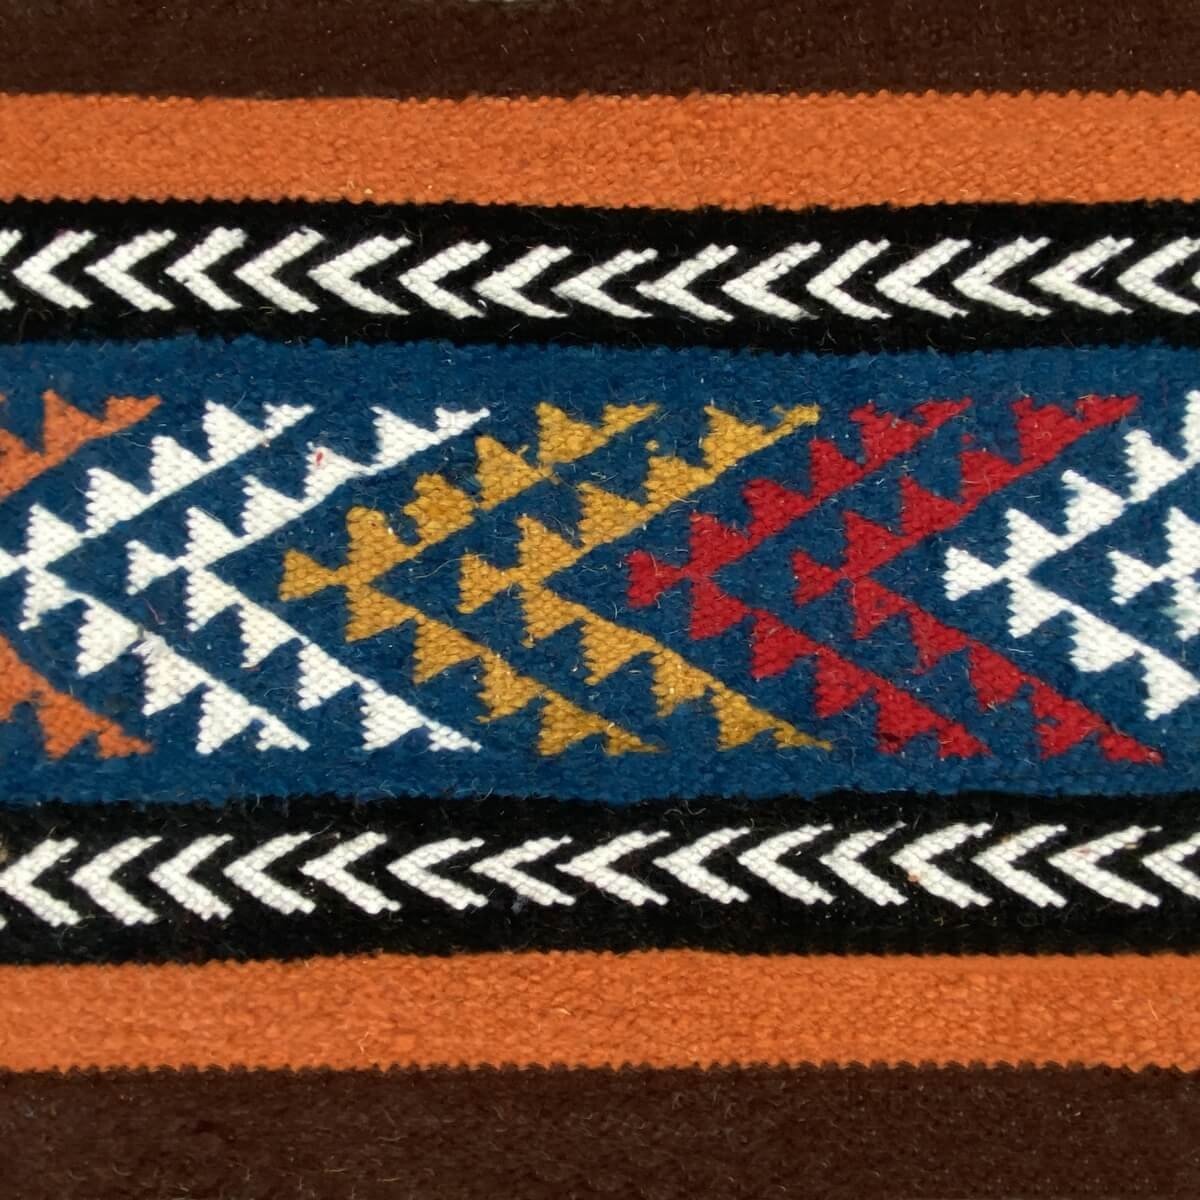 Berber tapijt Tapijt Kilim Beri 100x150 Veelkleurig (Handgeweven, Wol, Tunesië) Tunesisch kilimdeken, Marokkaanse stijl. Rechtho